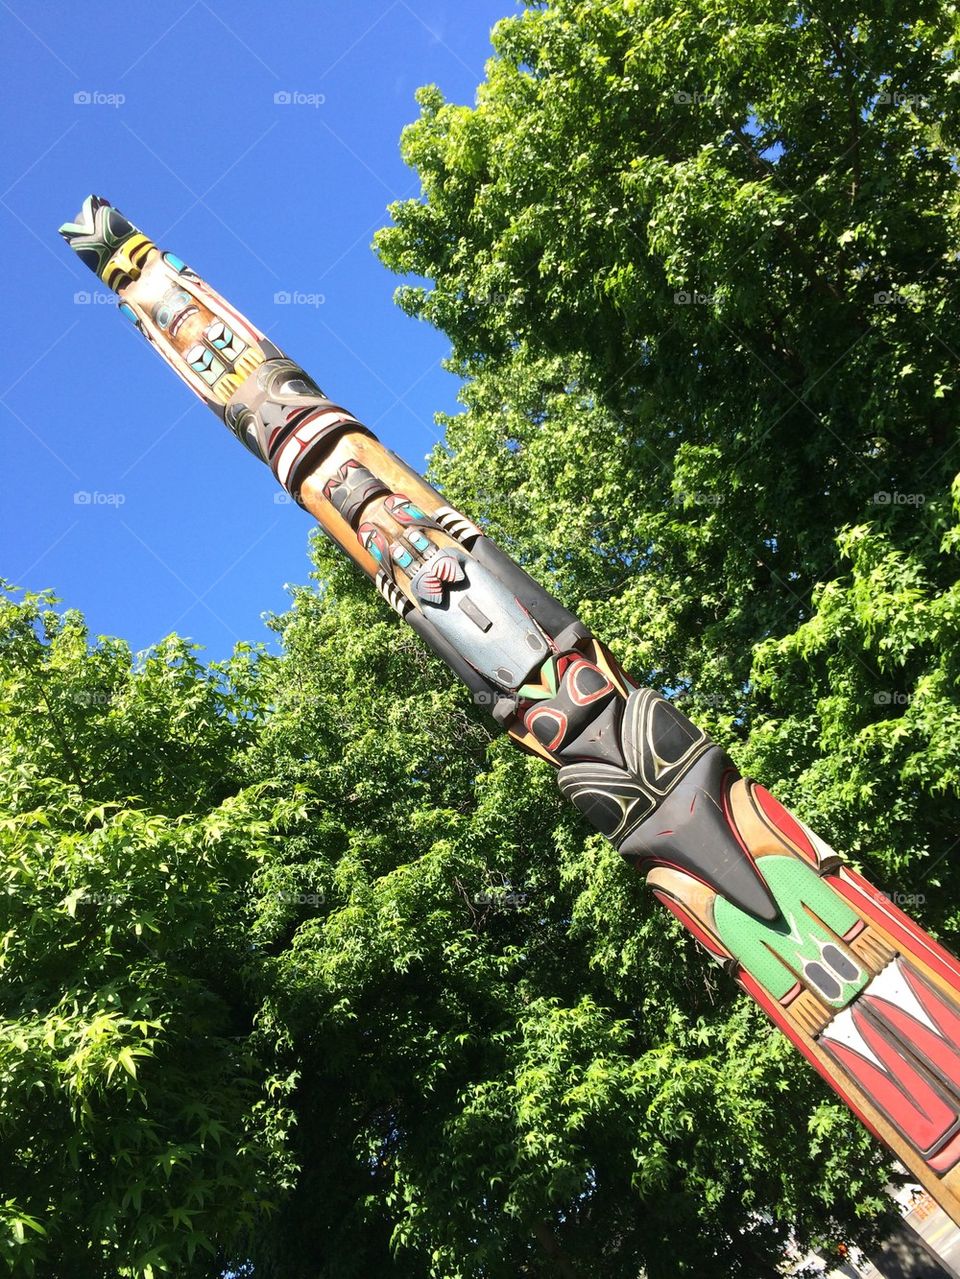 Native American Totem Pole